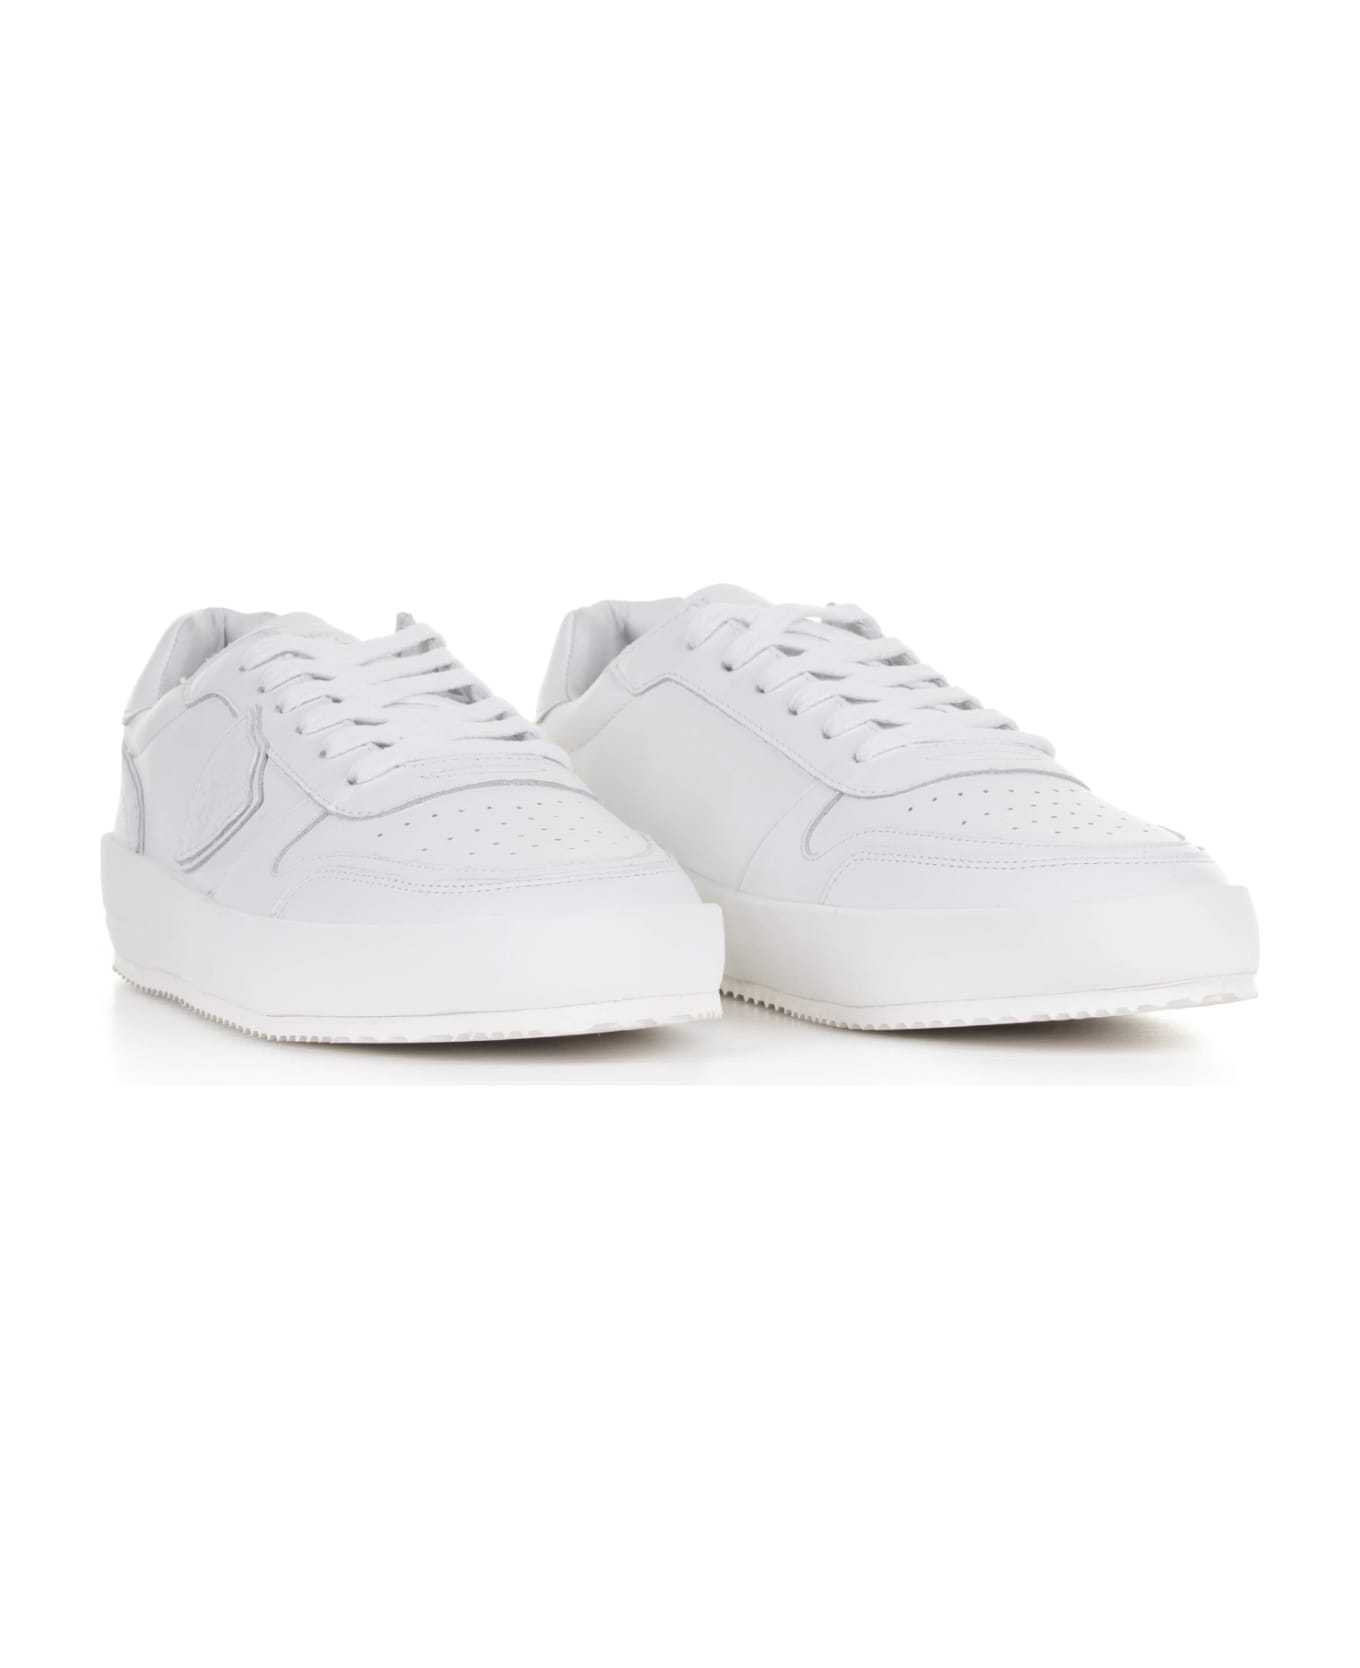 Philippe Model Nice White Low Sneakers For Men - BLANC スニーカー